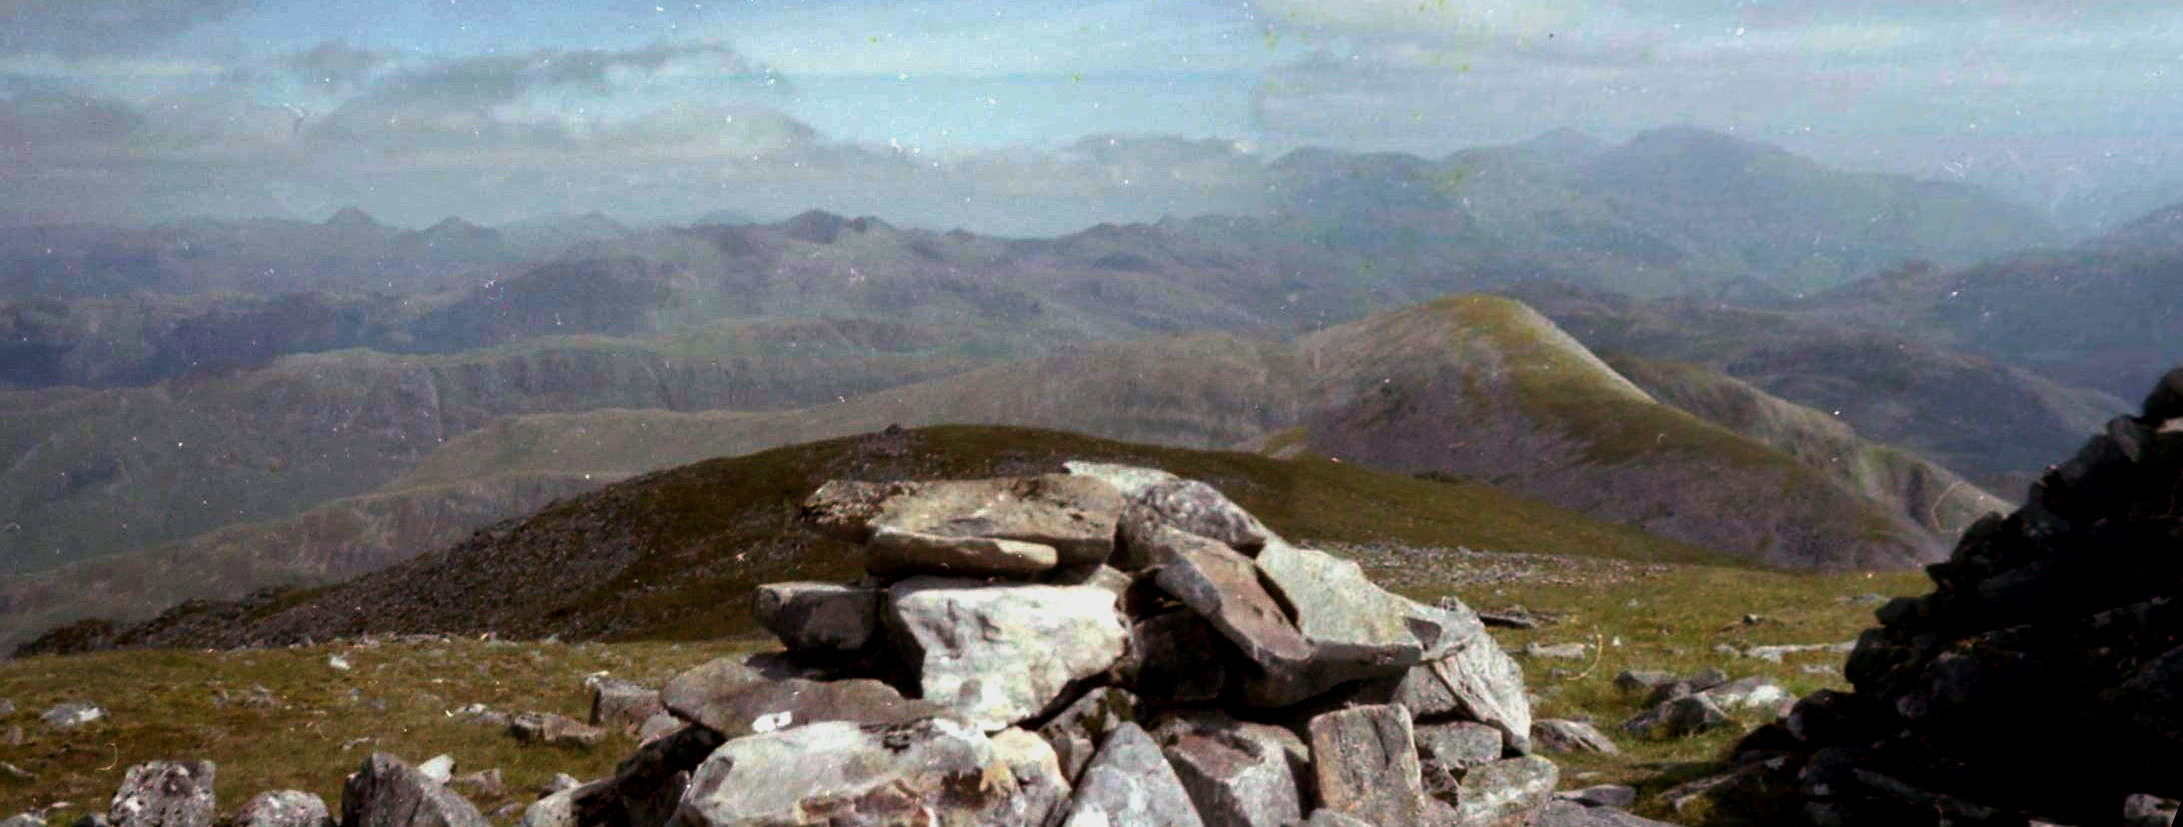 Summit view from Beinn Sgritheall